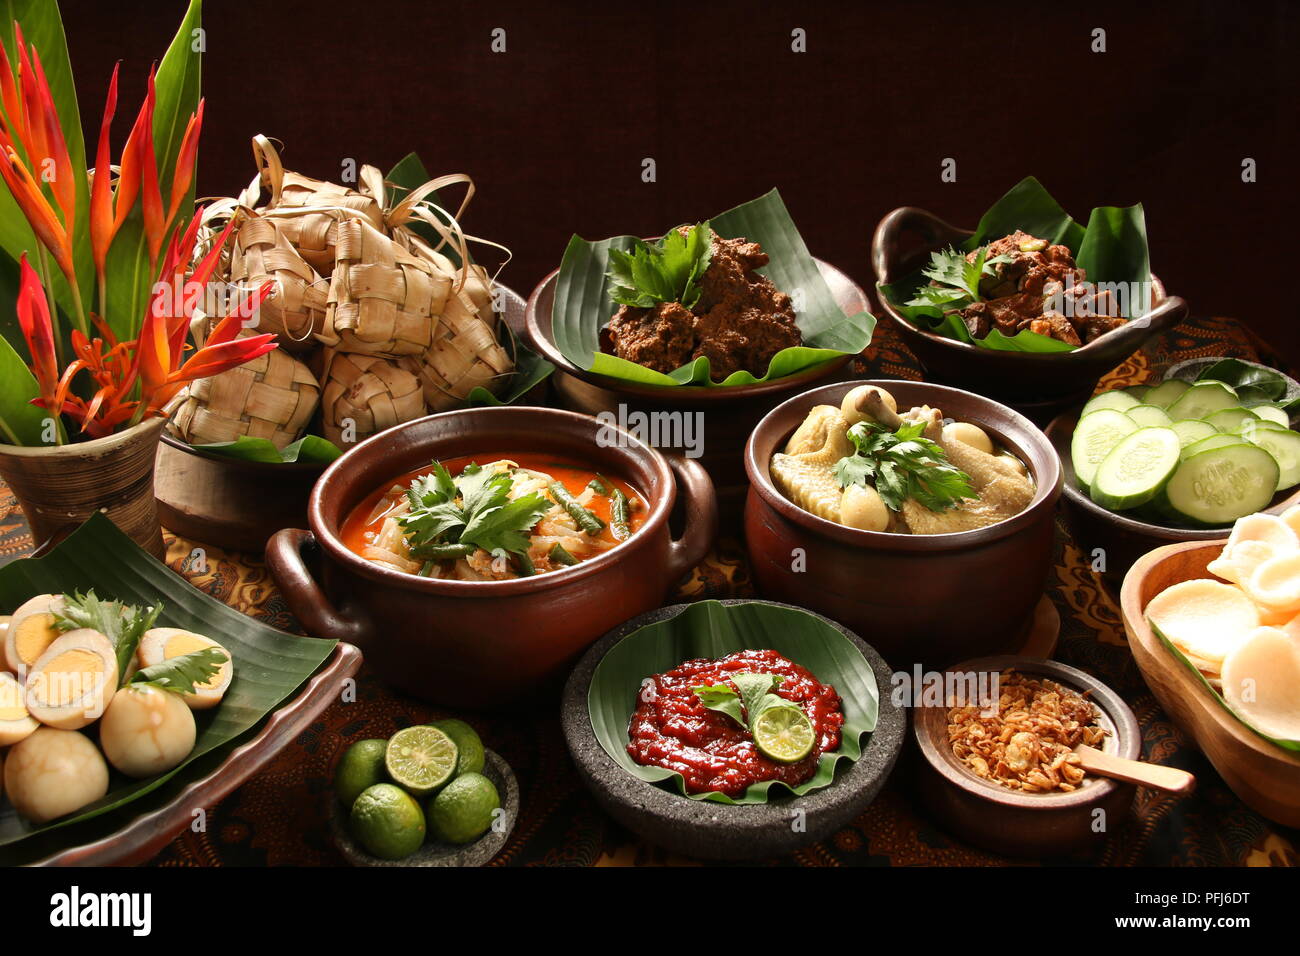 Ketupat Lebaran, the traditional celebratory dish of rice cake with several side dishes; popular during Eid celebrations. Stock Photo